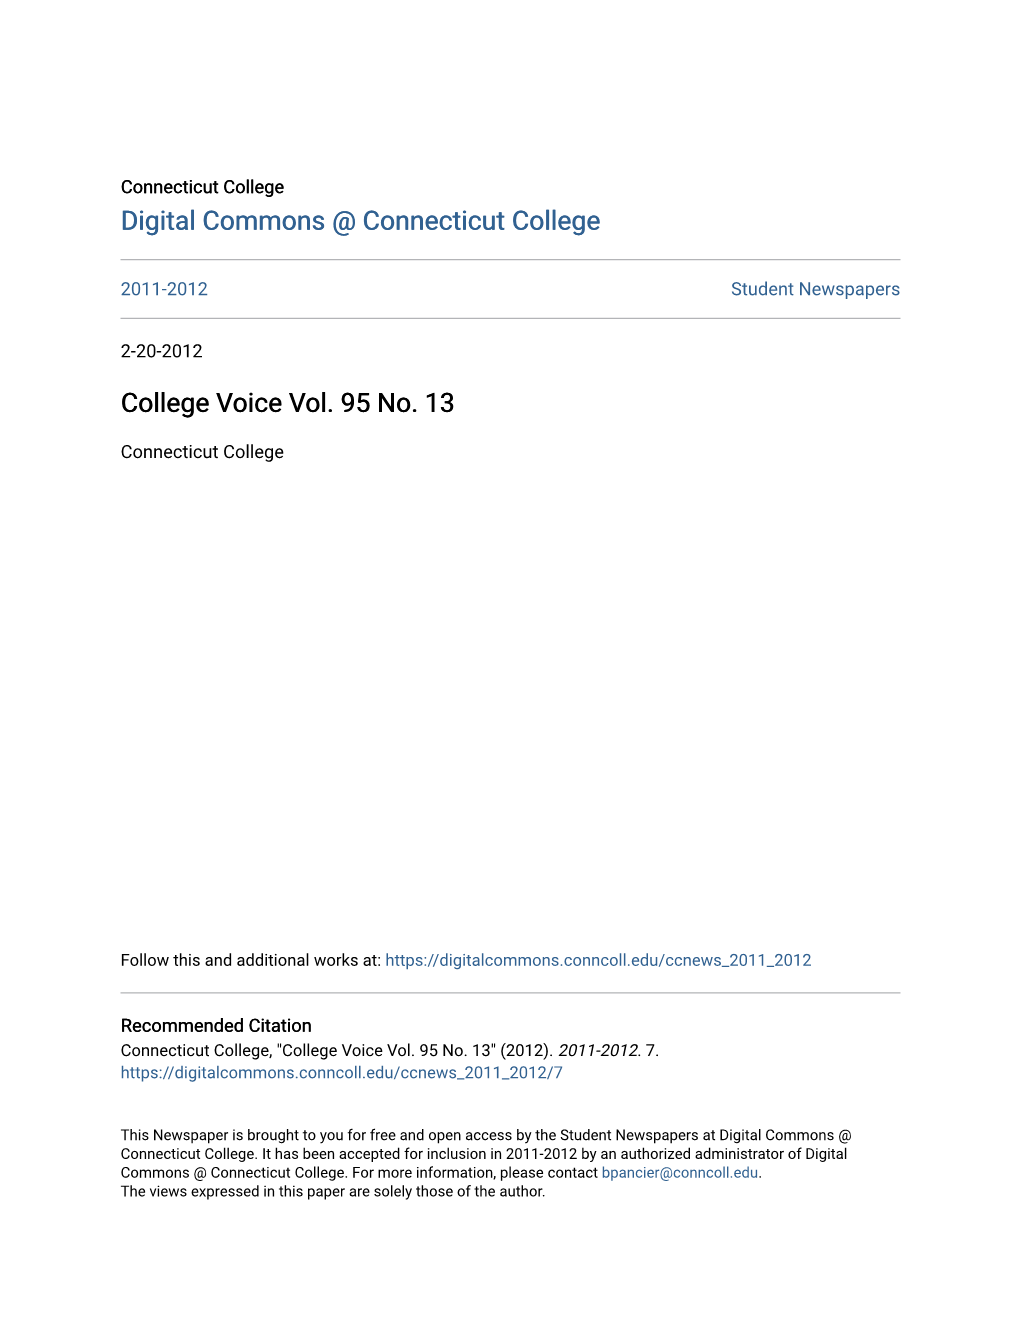 College Voice Vol. 95 No. 13